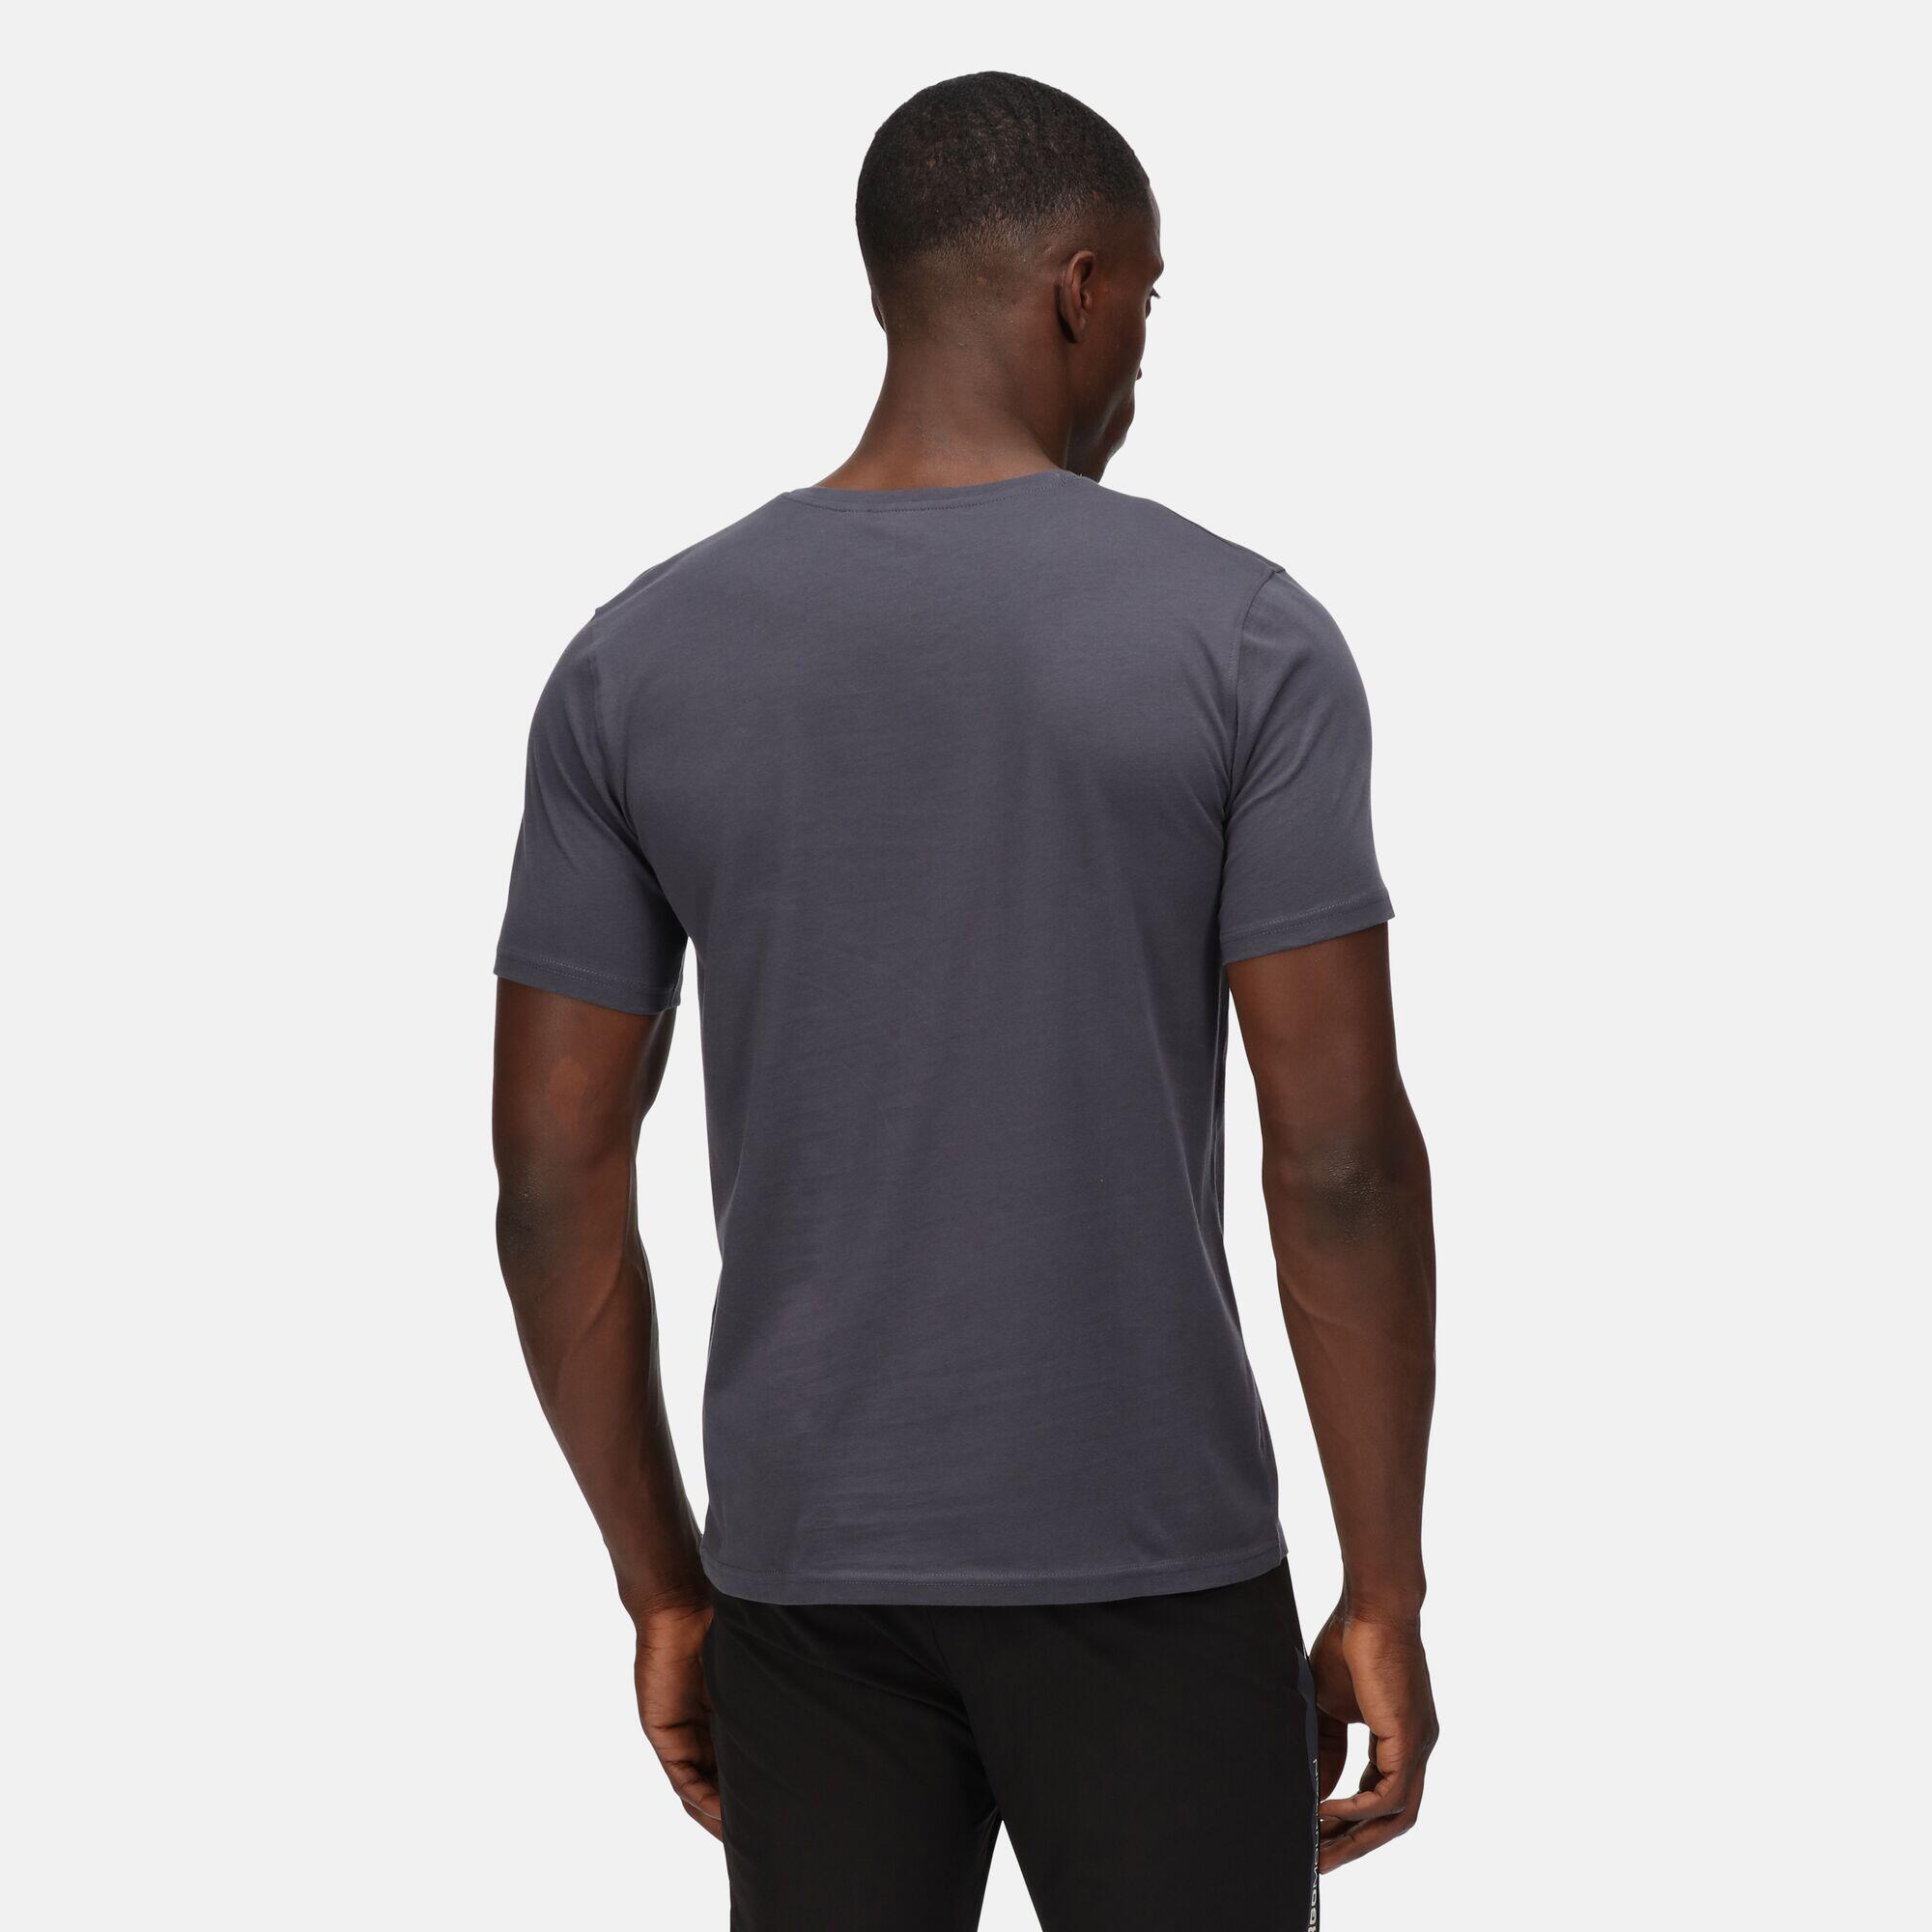 Tait Men's Walking Short Sleeve T-Shirt - Grey 2/5